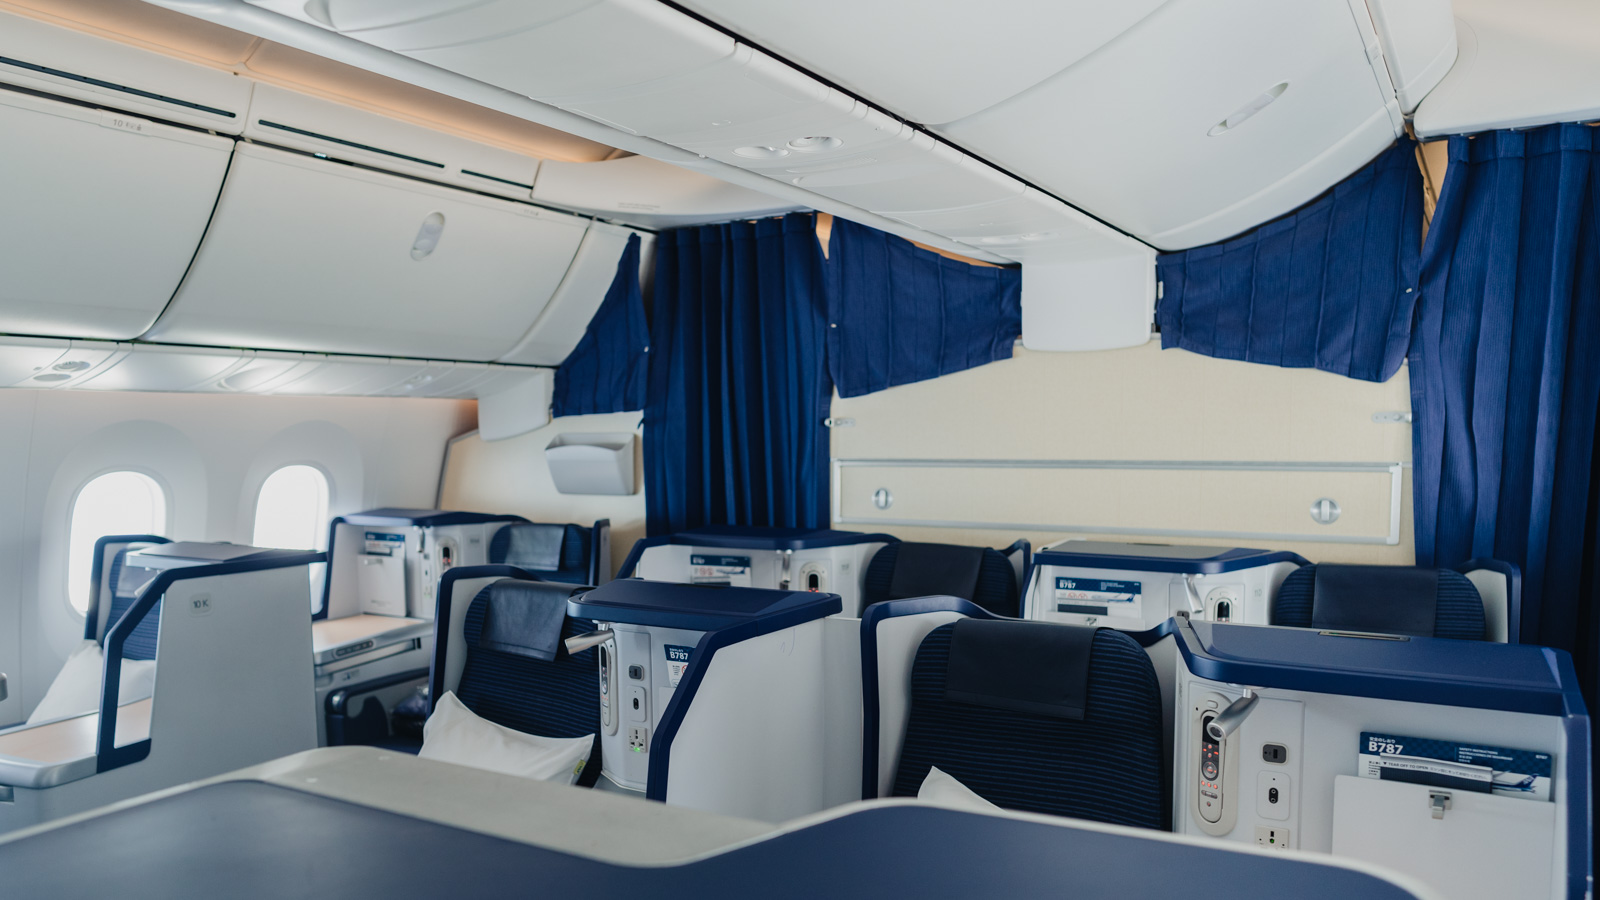 ANA Boeing 787-9 Business Class rear cabin